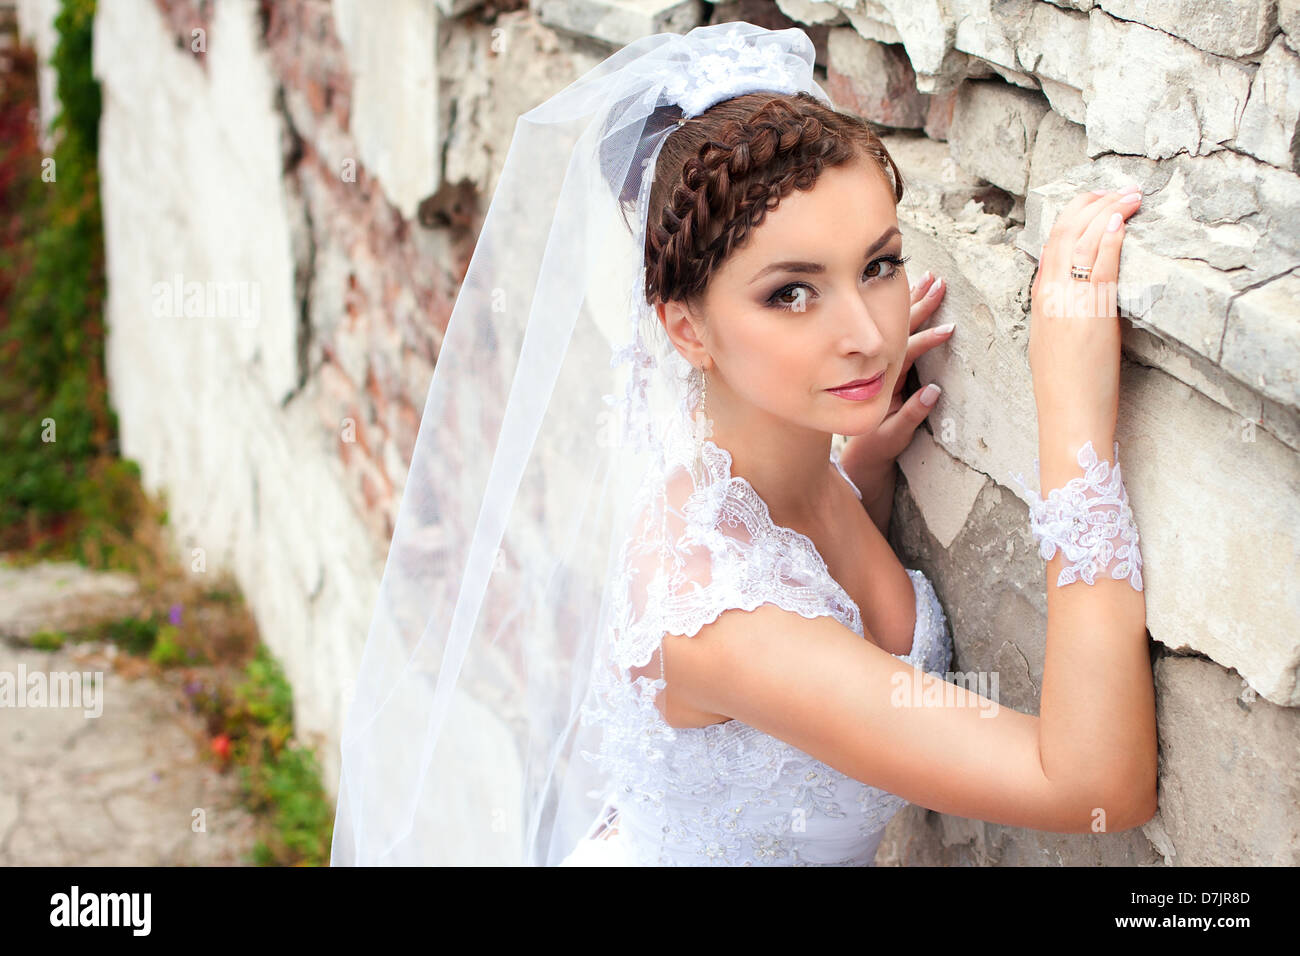 Romantic portrait of the beautiful bride near pillars Stock Photo